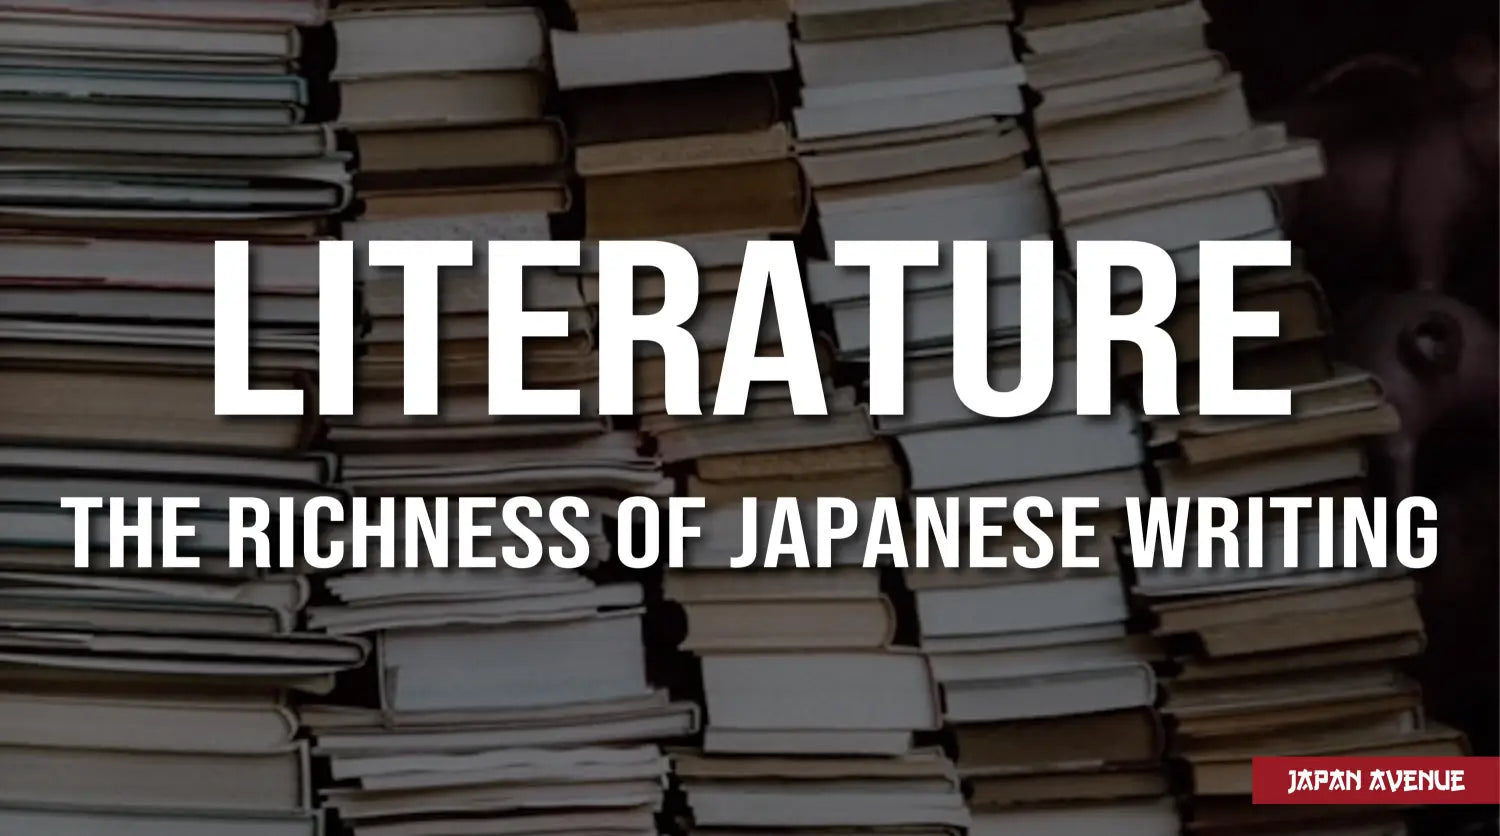 japanese literature